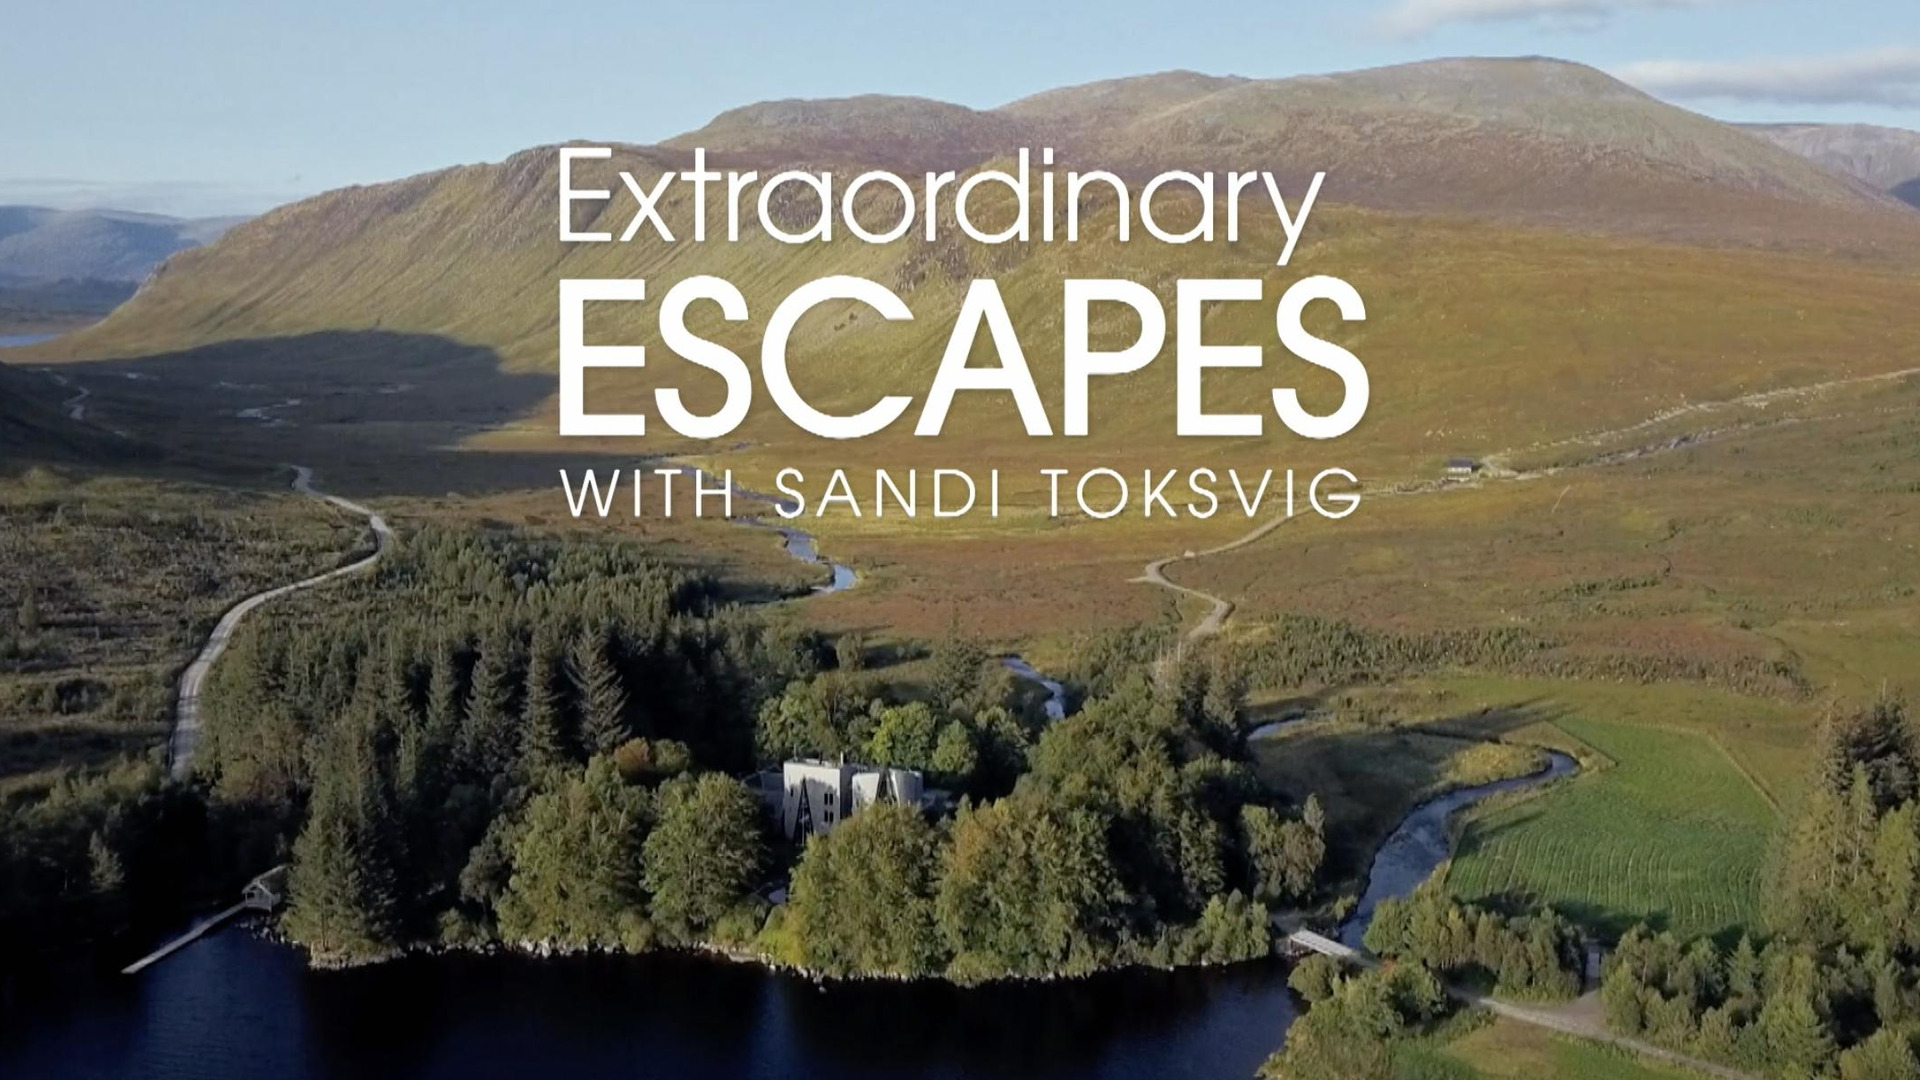 Show Extraordinary Escapes with Sandi Toksvig